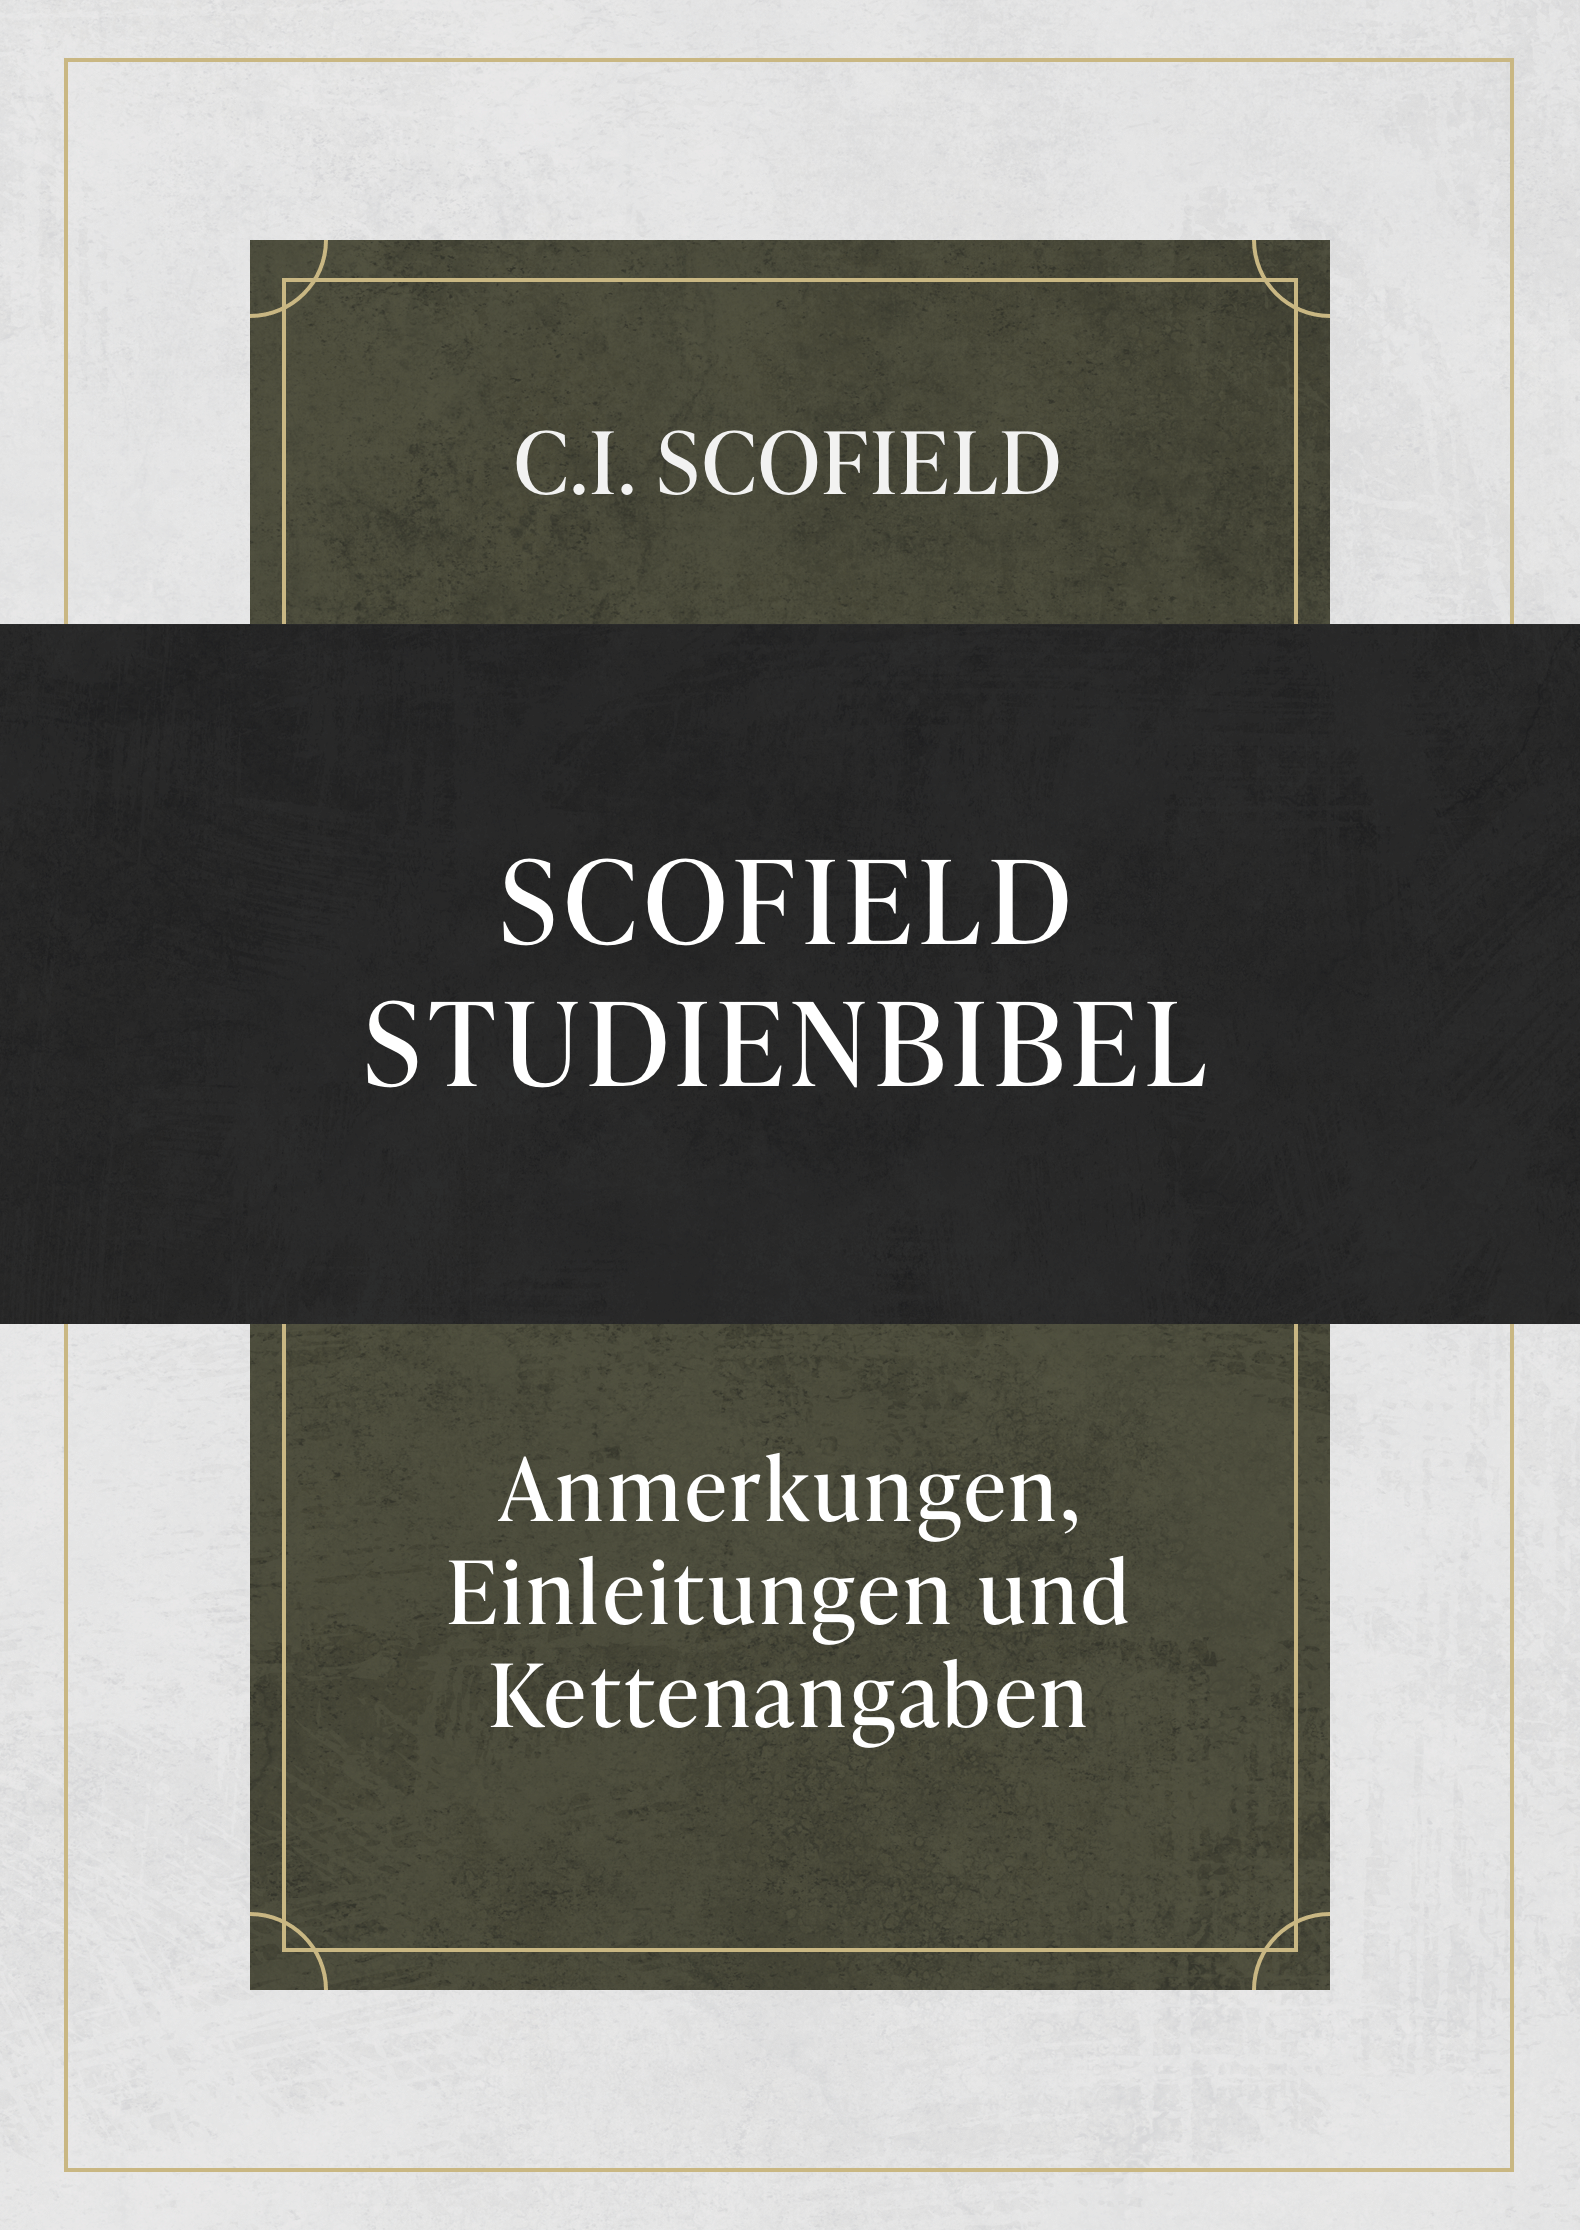 Scofield Studienbibel (Anmerkungen zum Text)